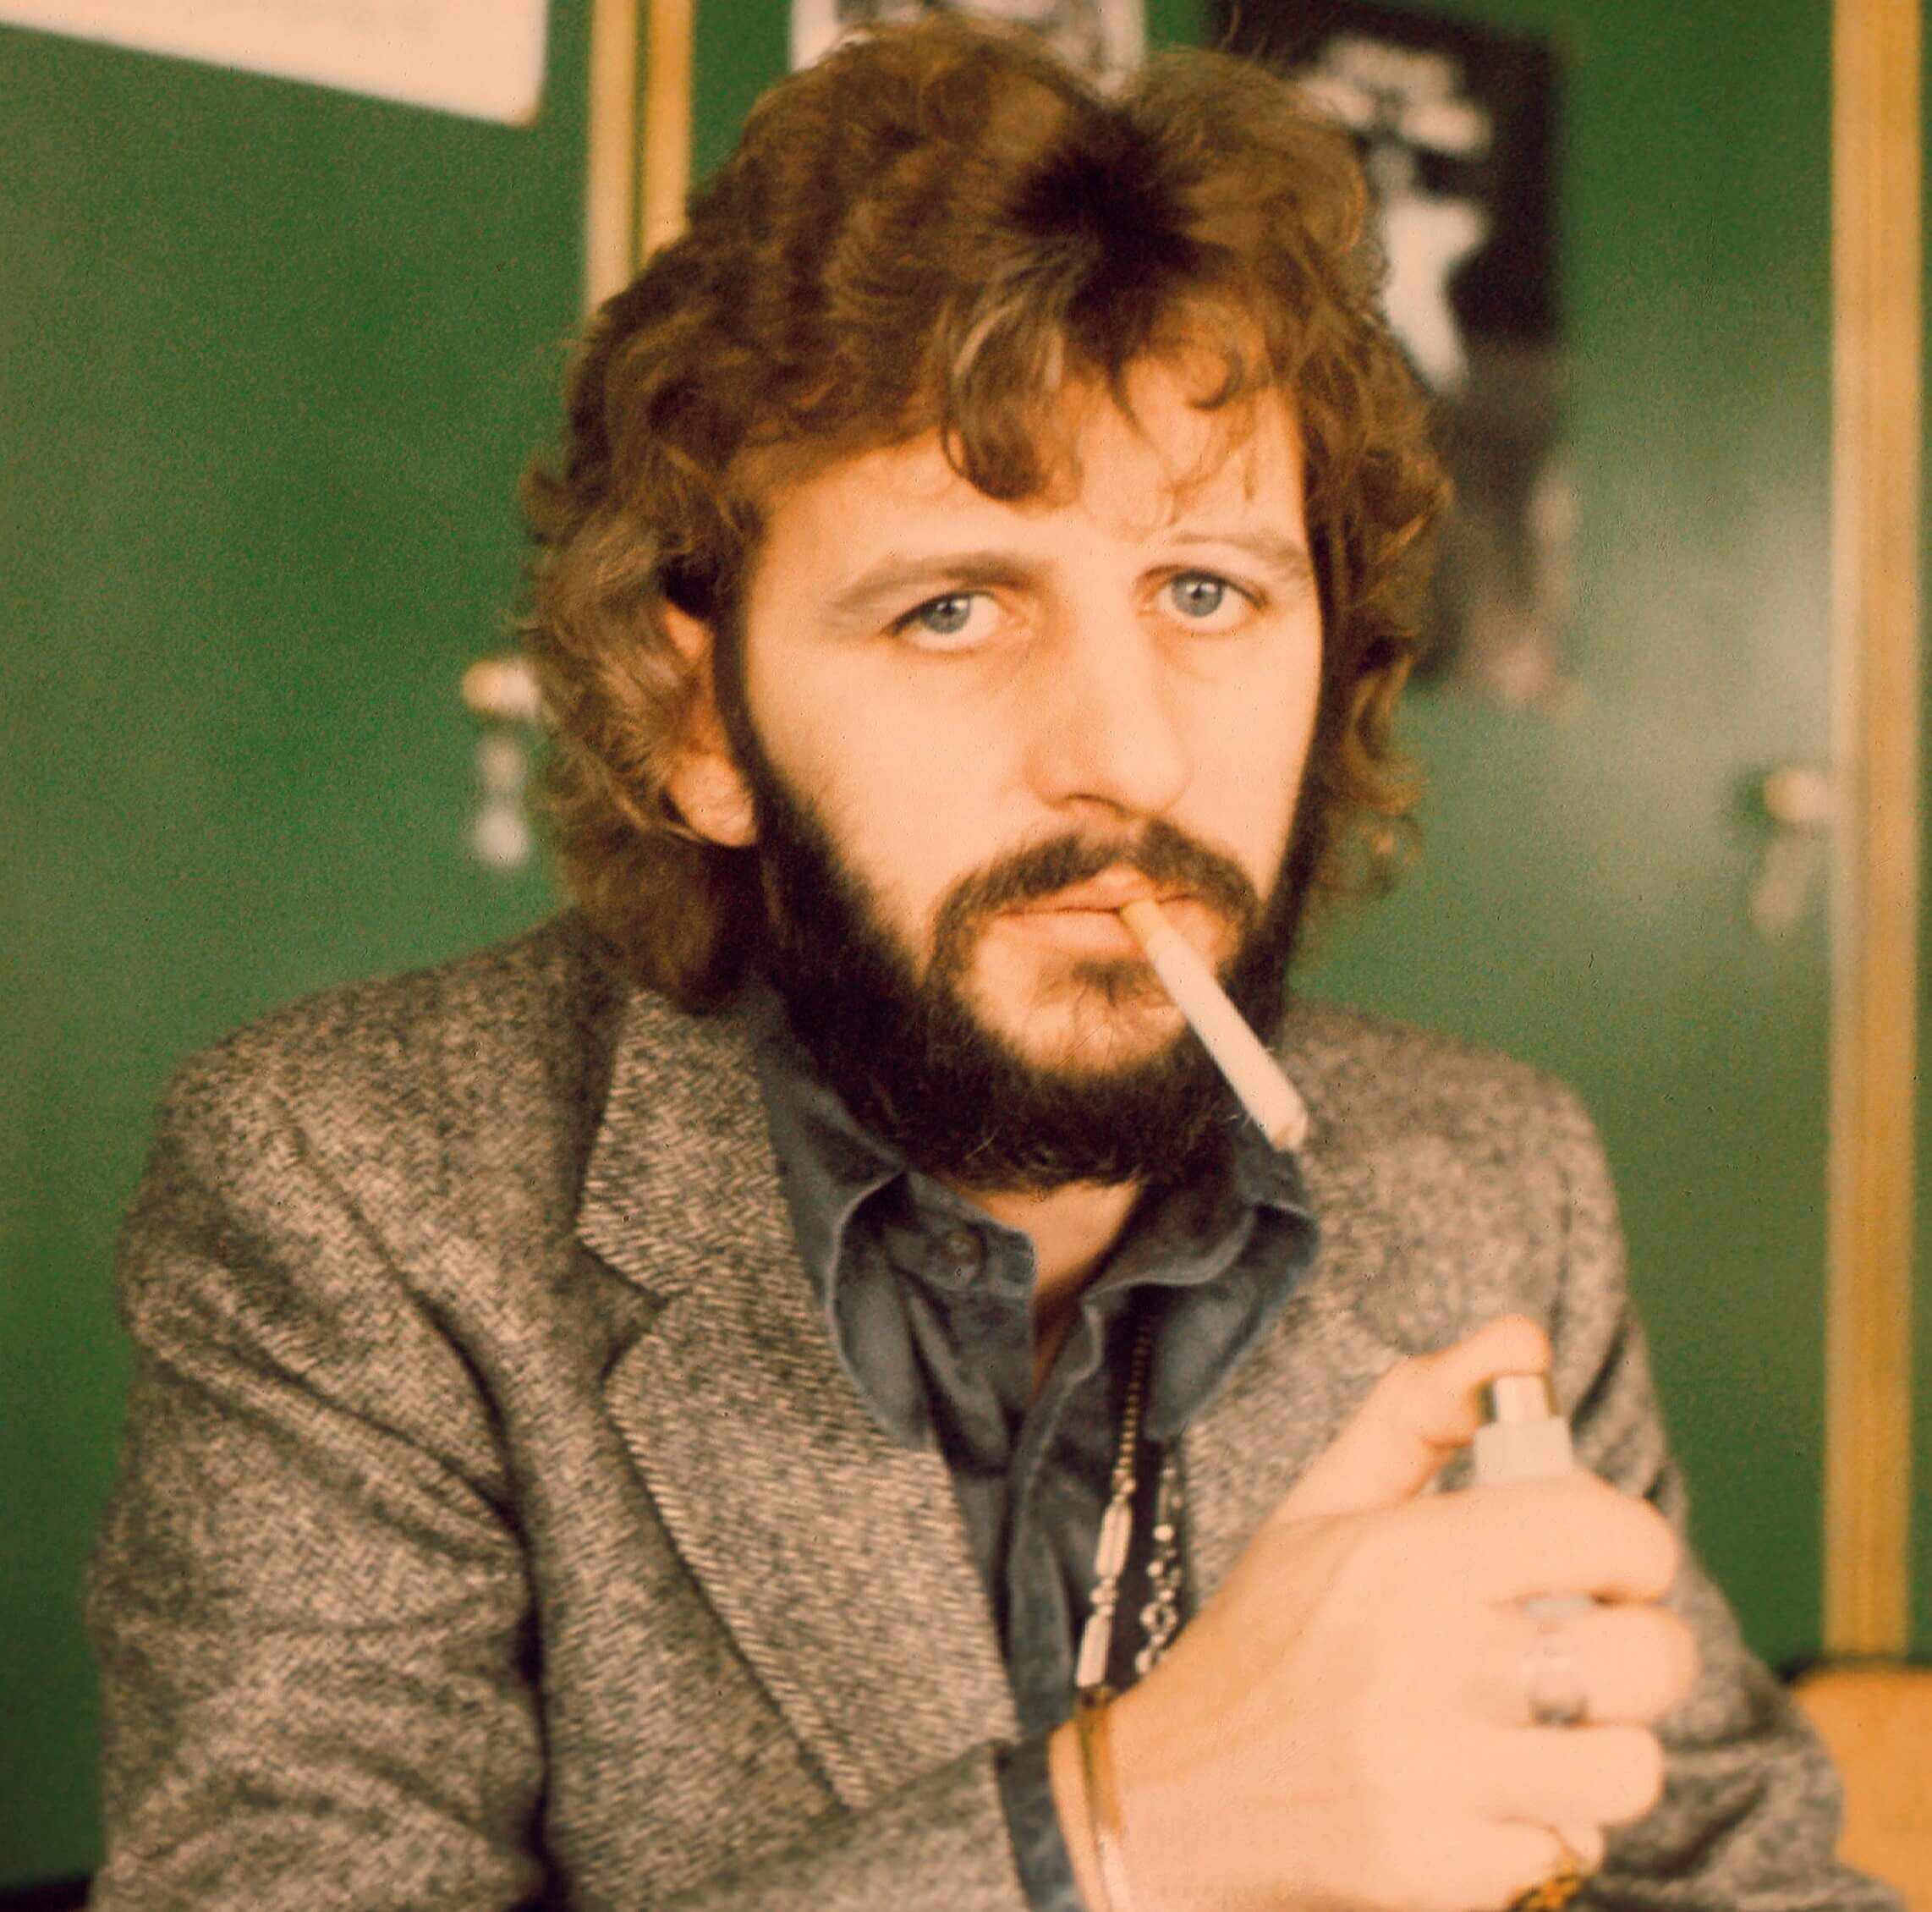 "Photograph" singer Ringo Starr wearing a suit jacket